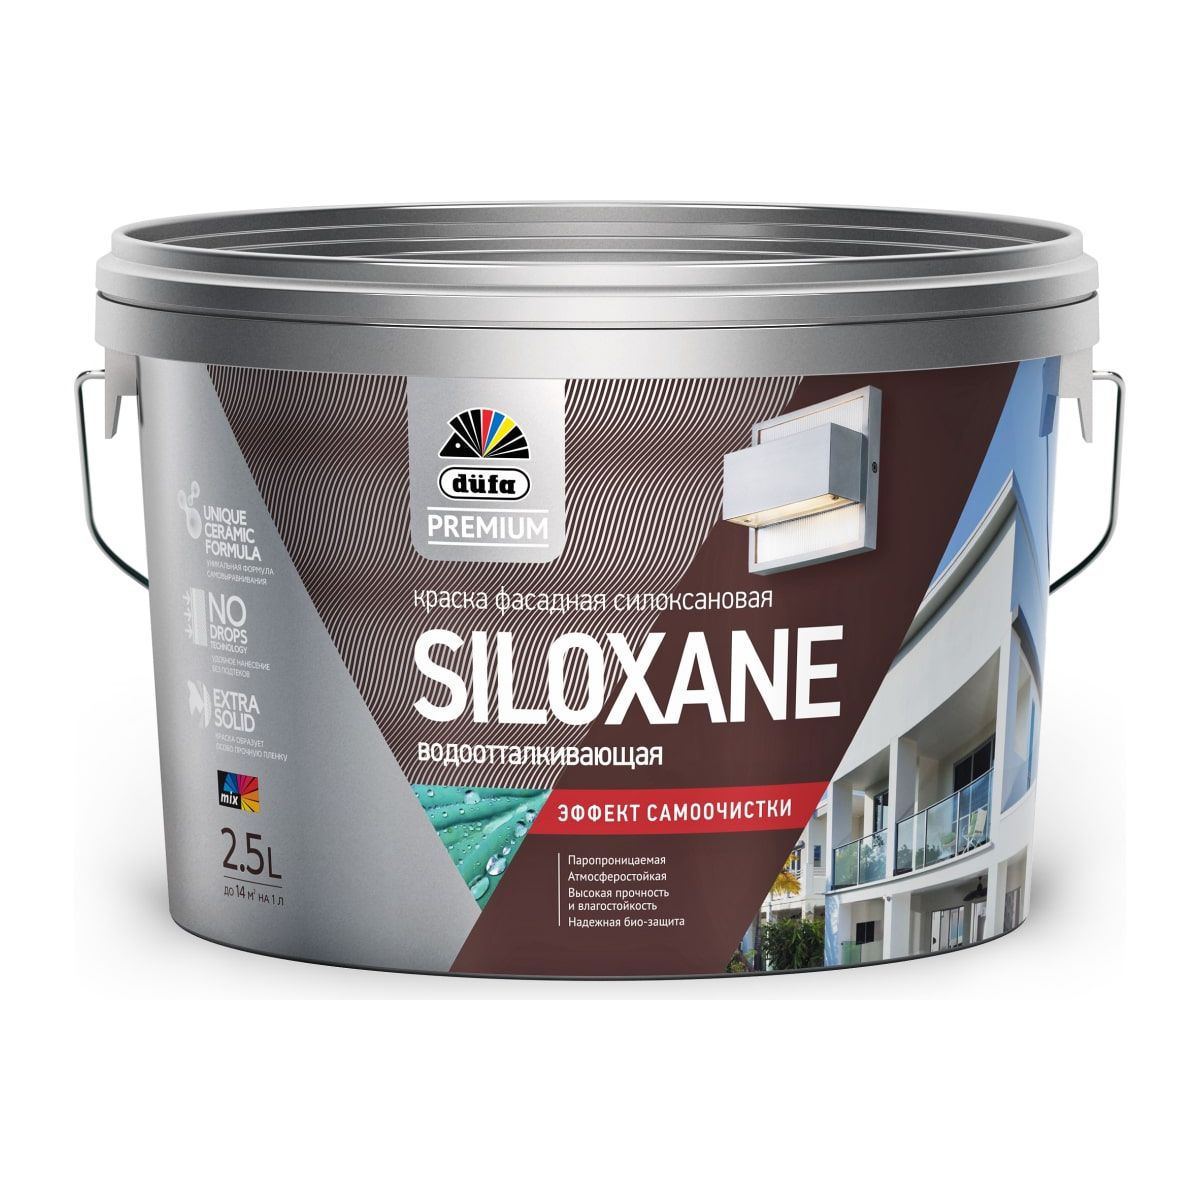 фото Краска dufa premium siloxane водно-дисперсионная, фасадная, силоксановая, база 1, 2,5 л